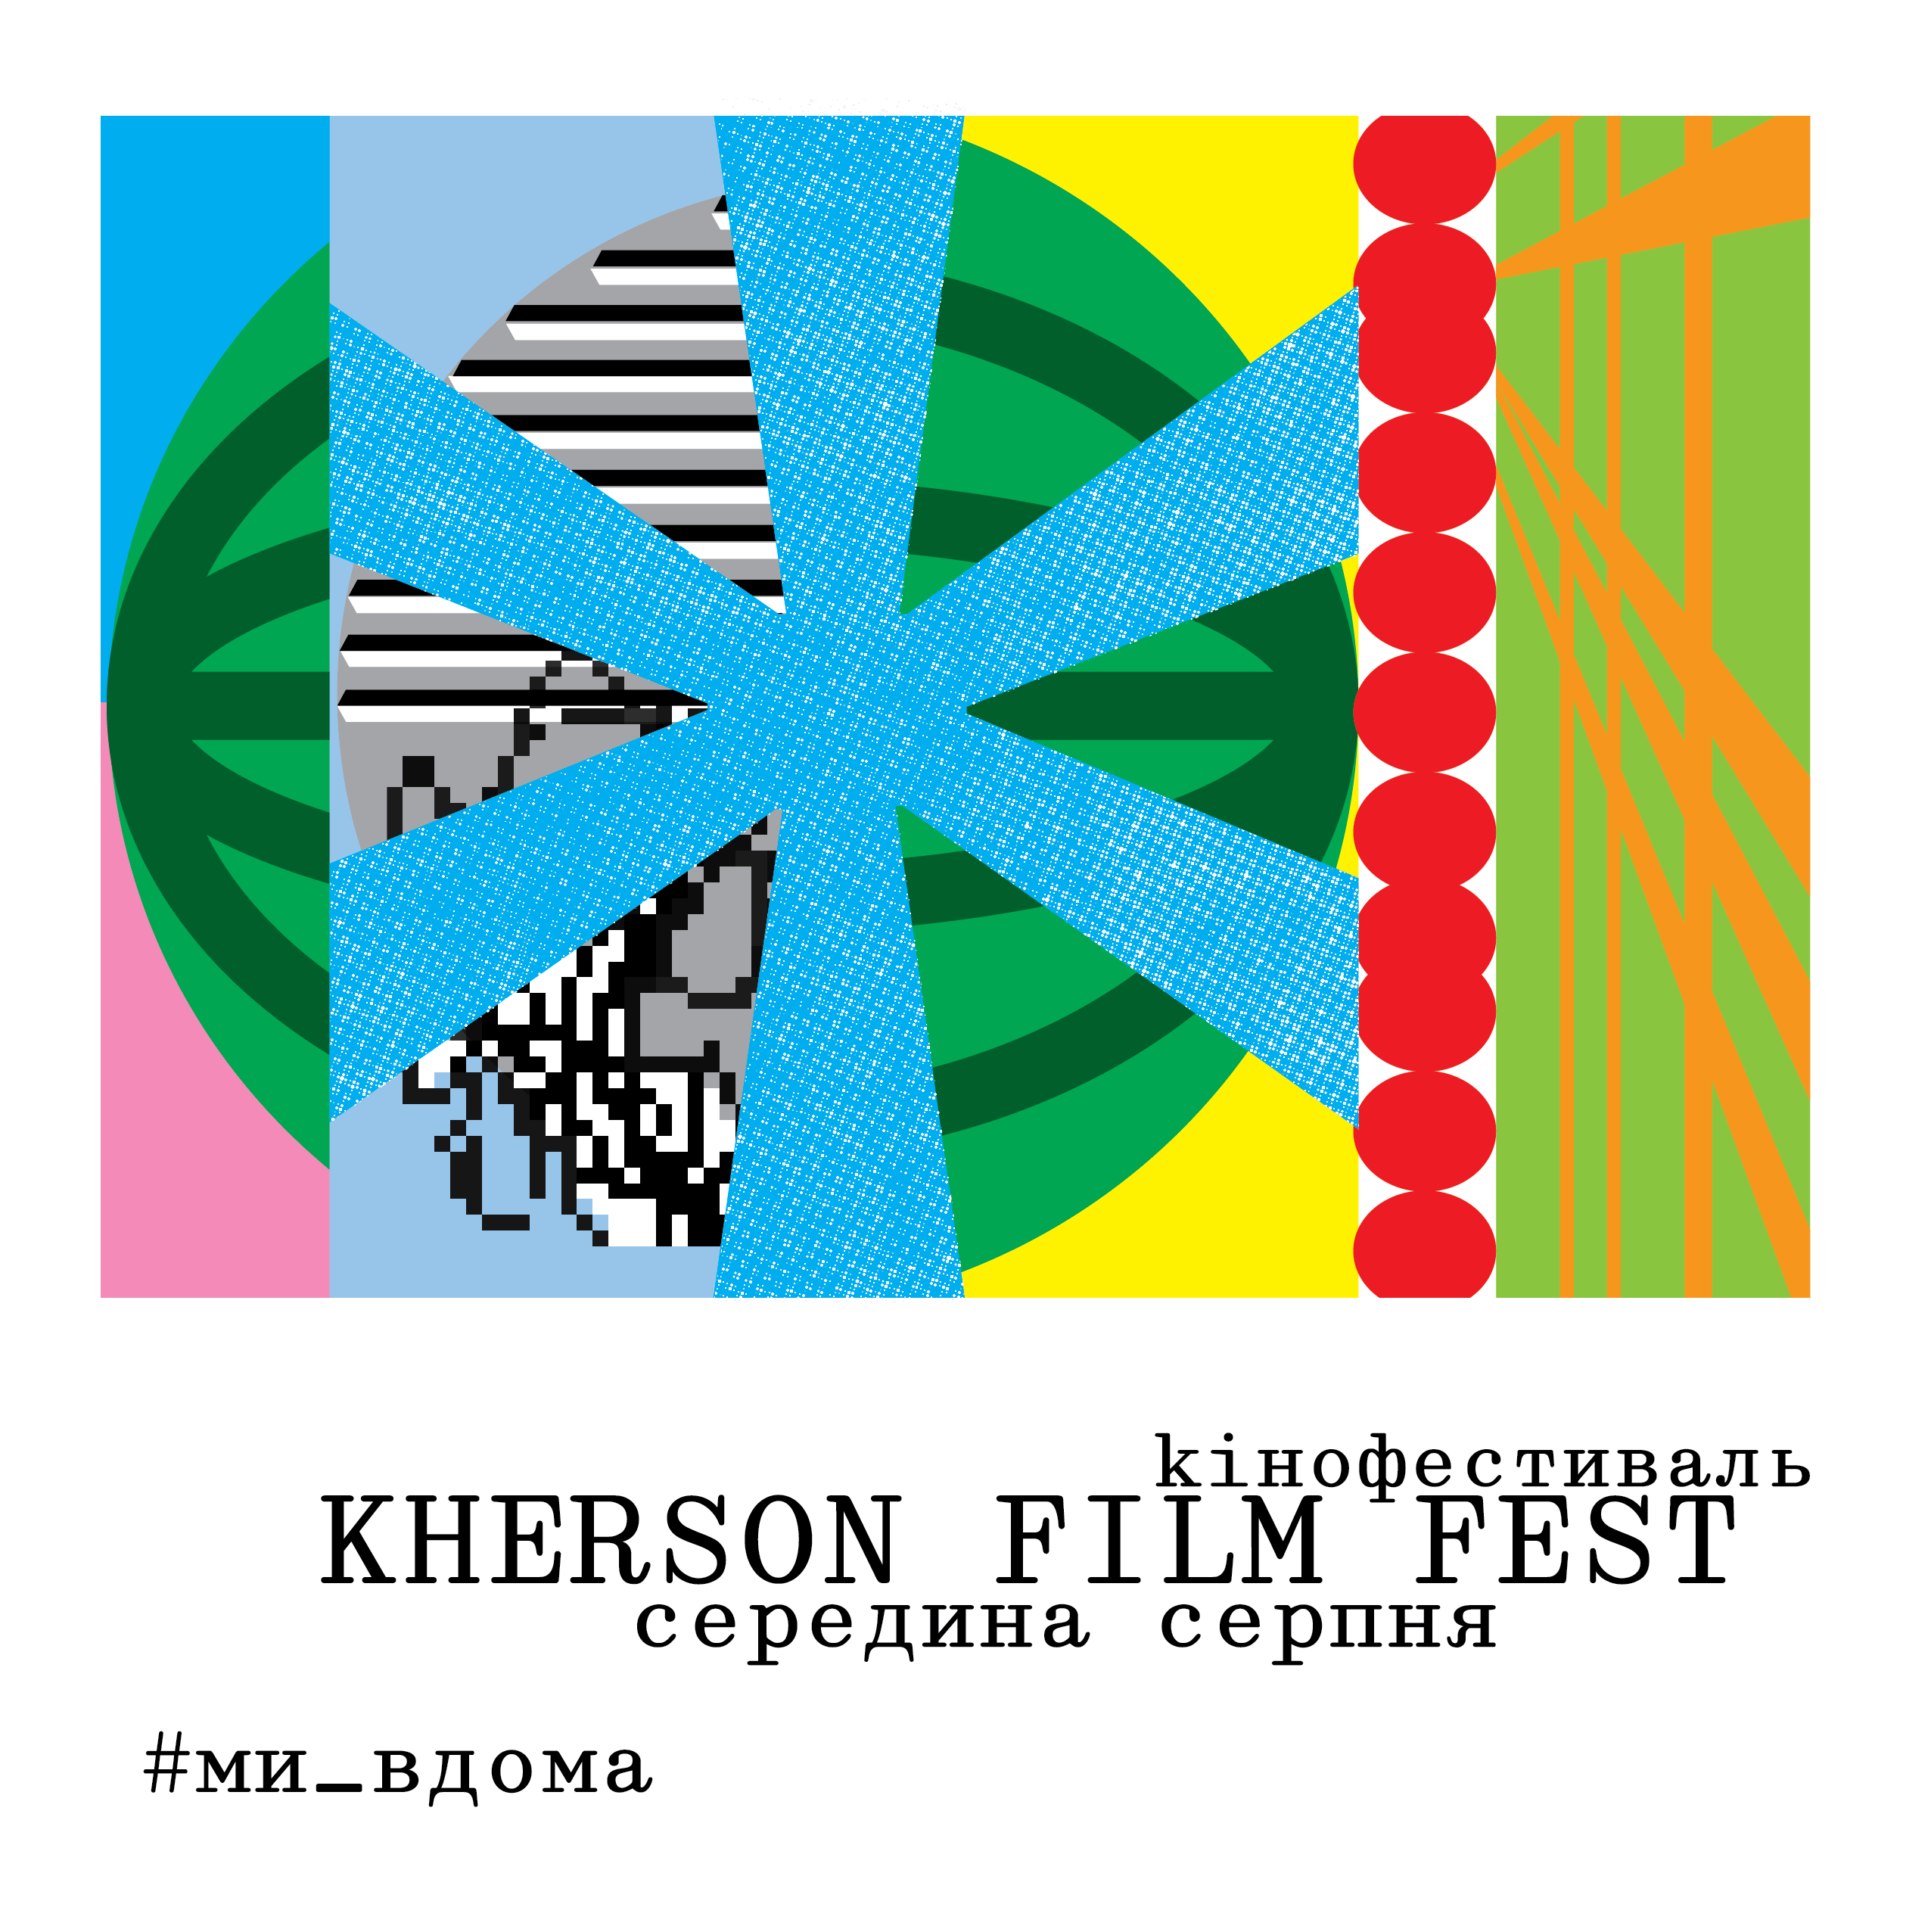 Kherson Film Fest